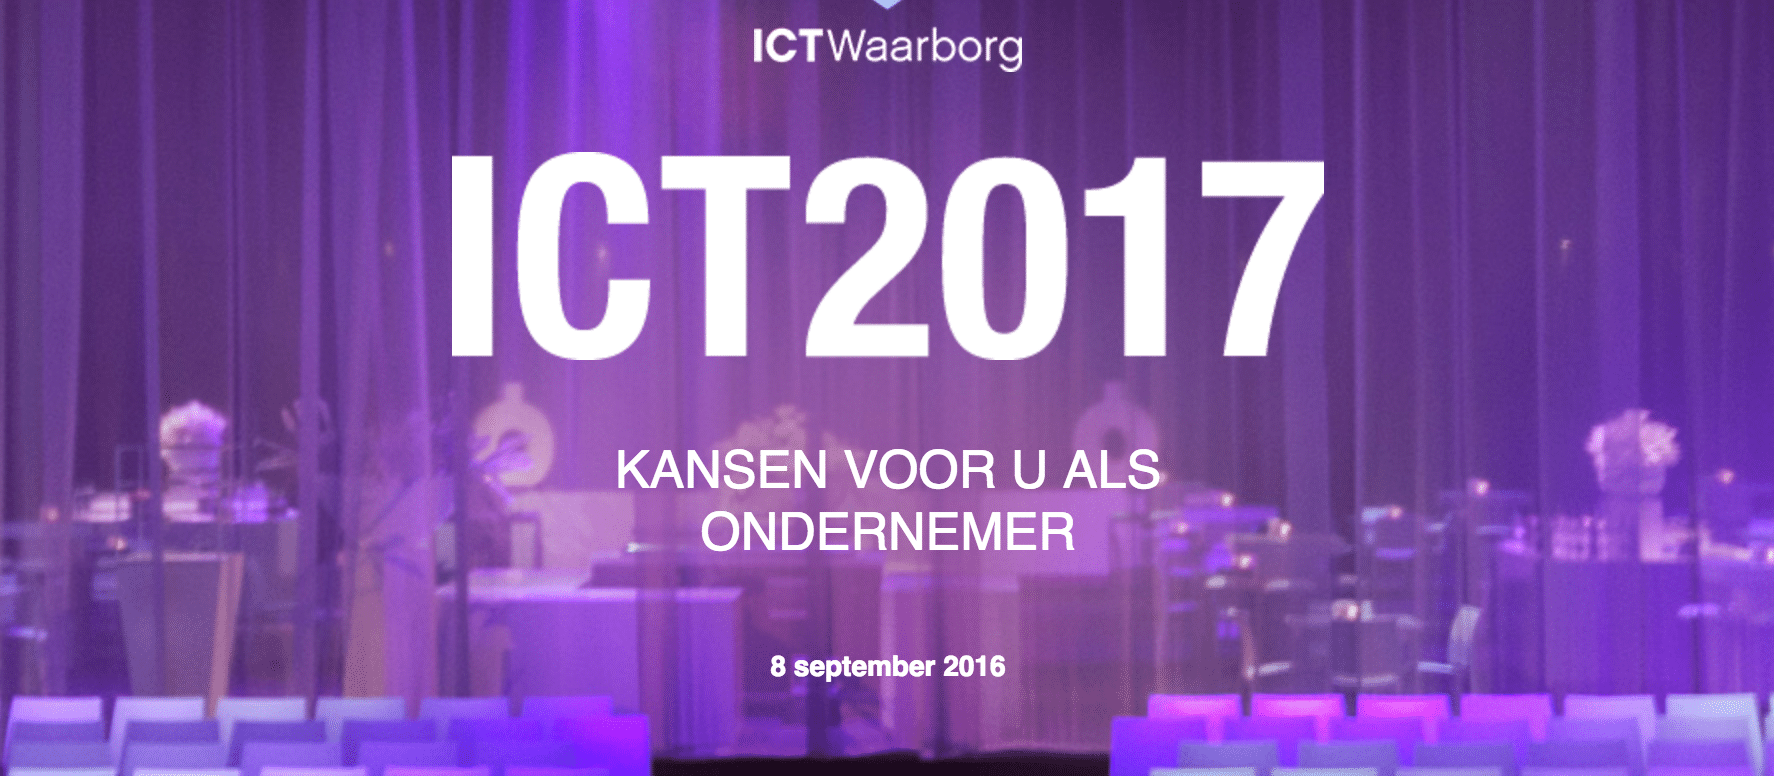 ict2017 evenement